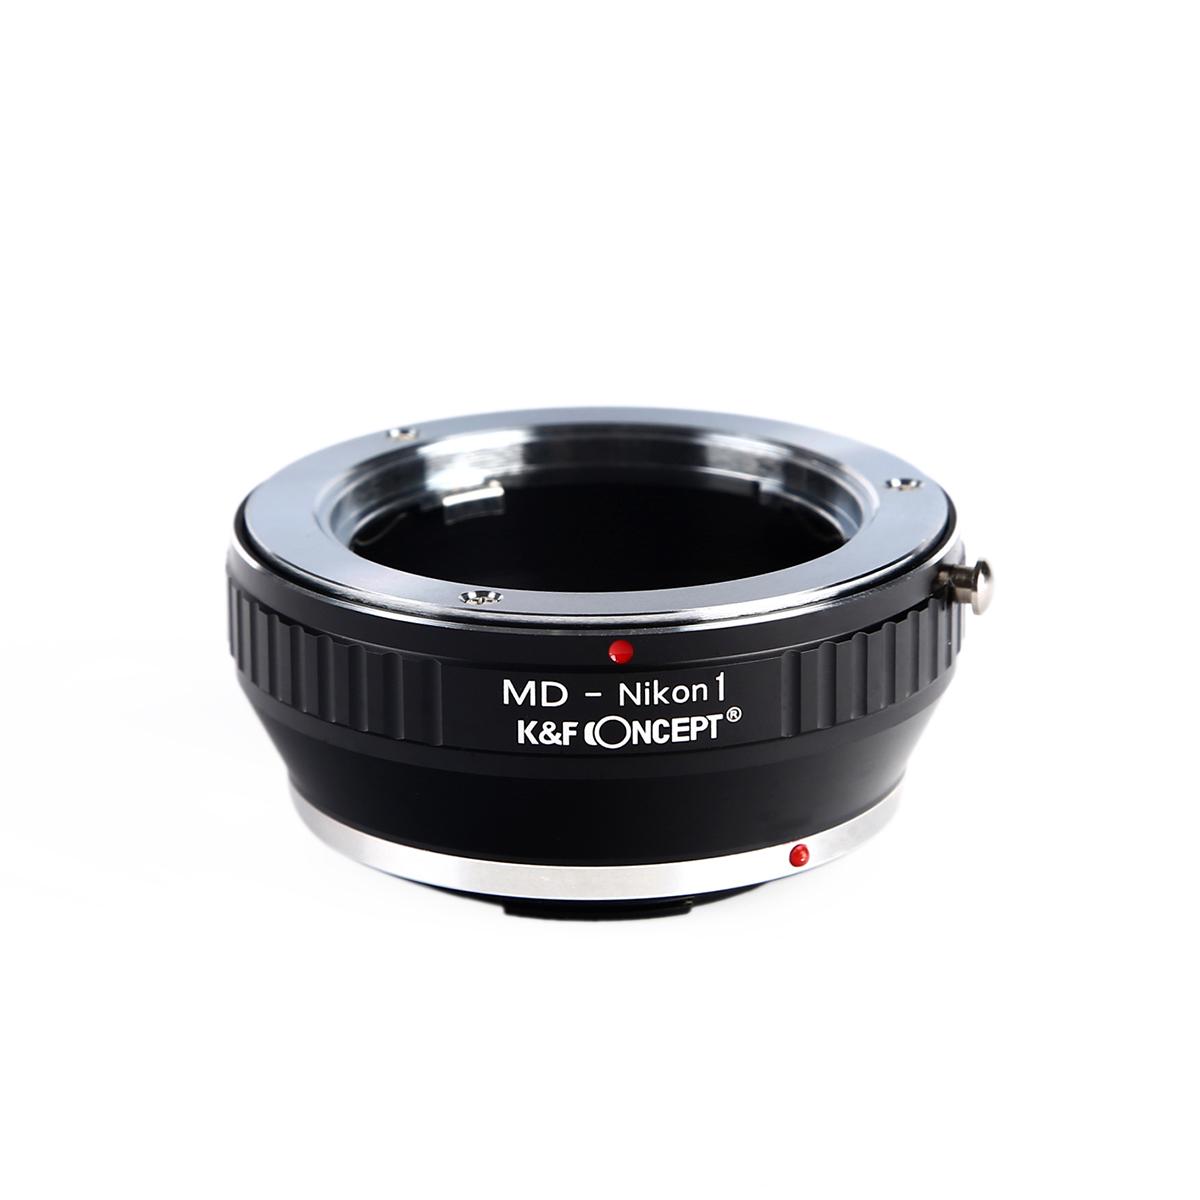 K&F Concept M15201 Minolta MD MC Lenses to Nikon 1 Lens 